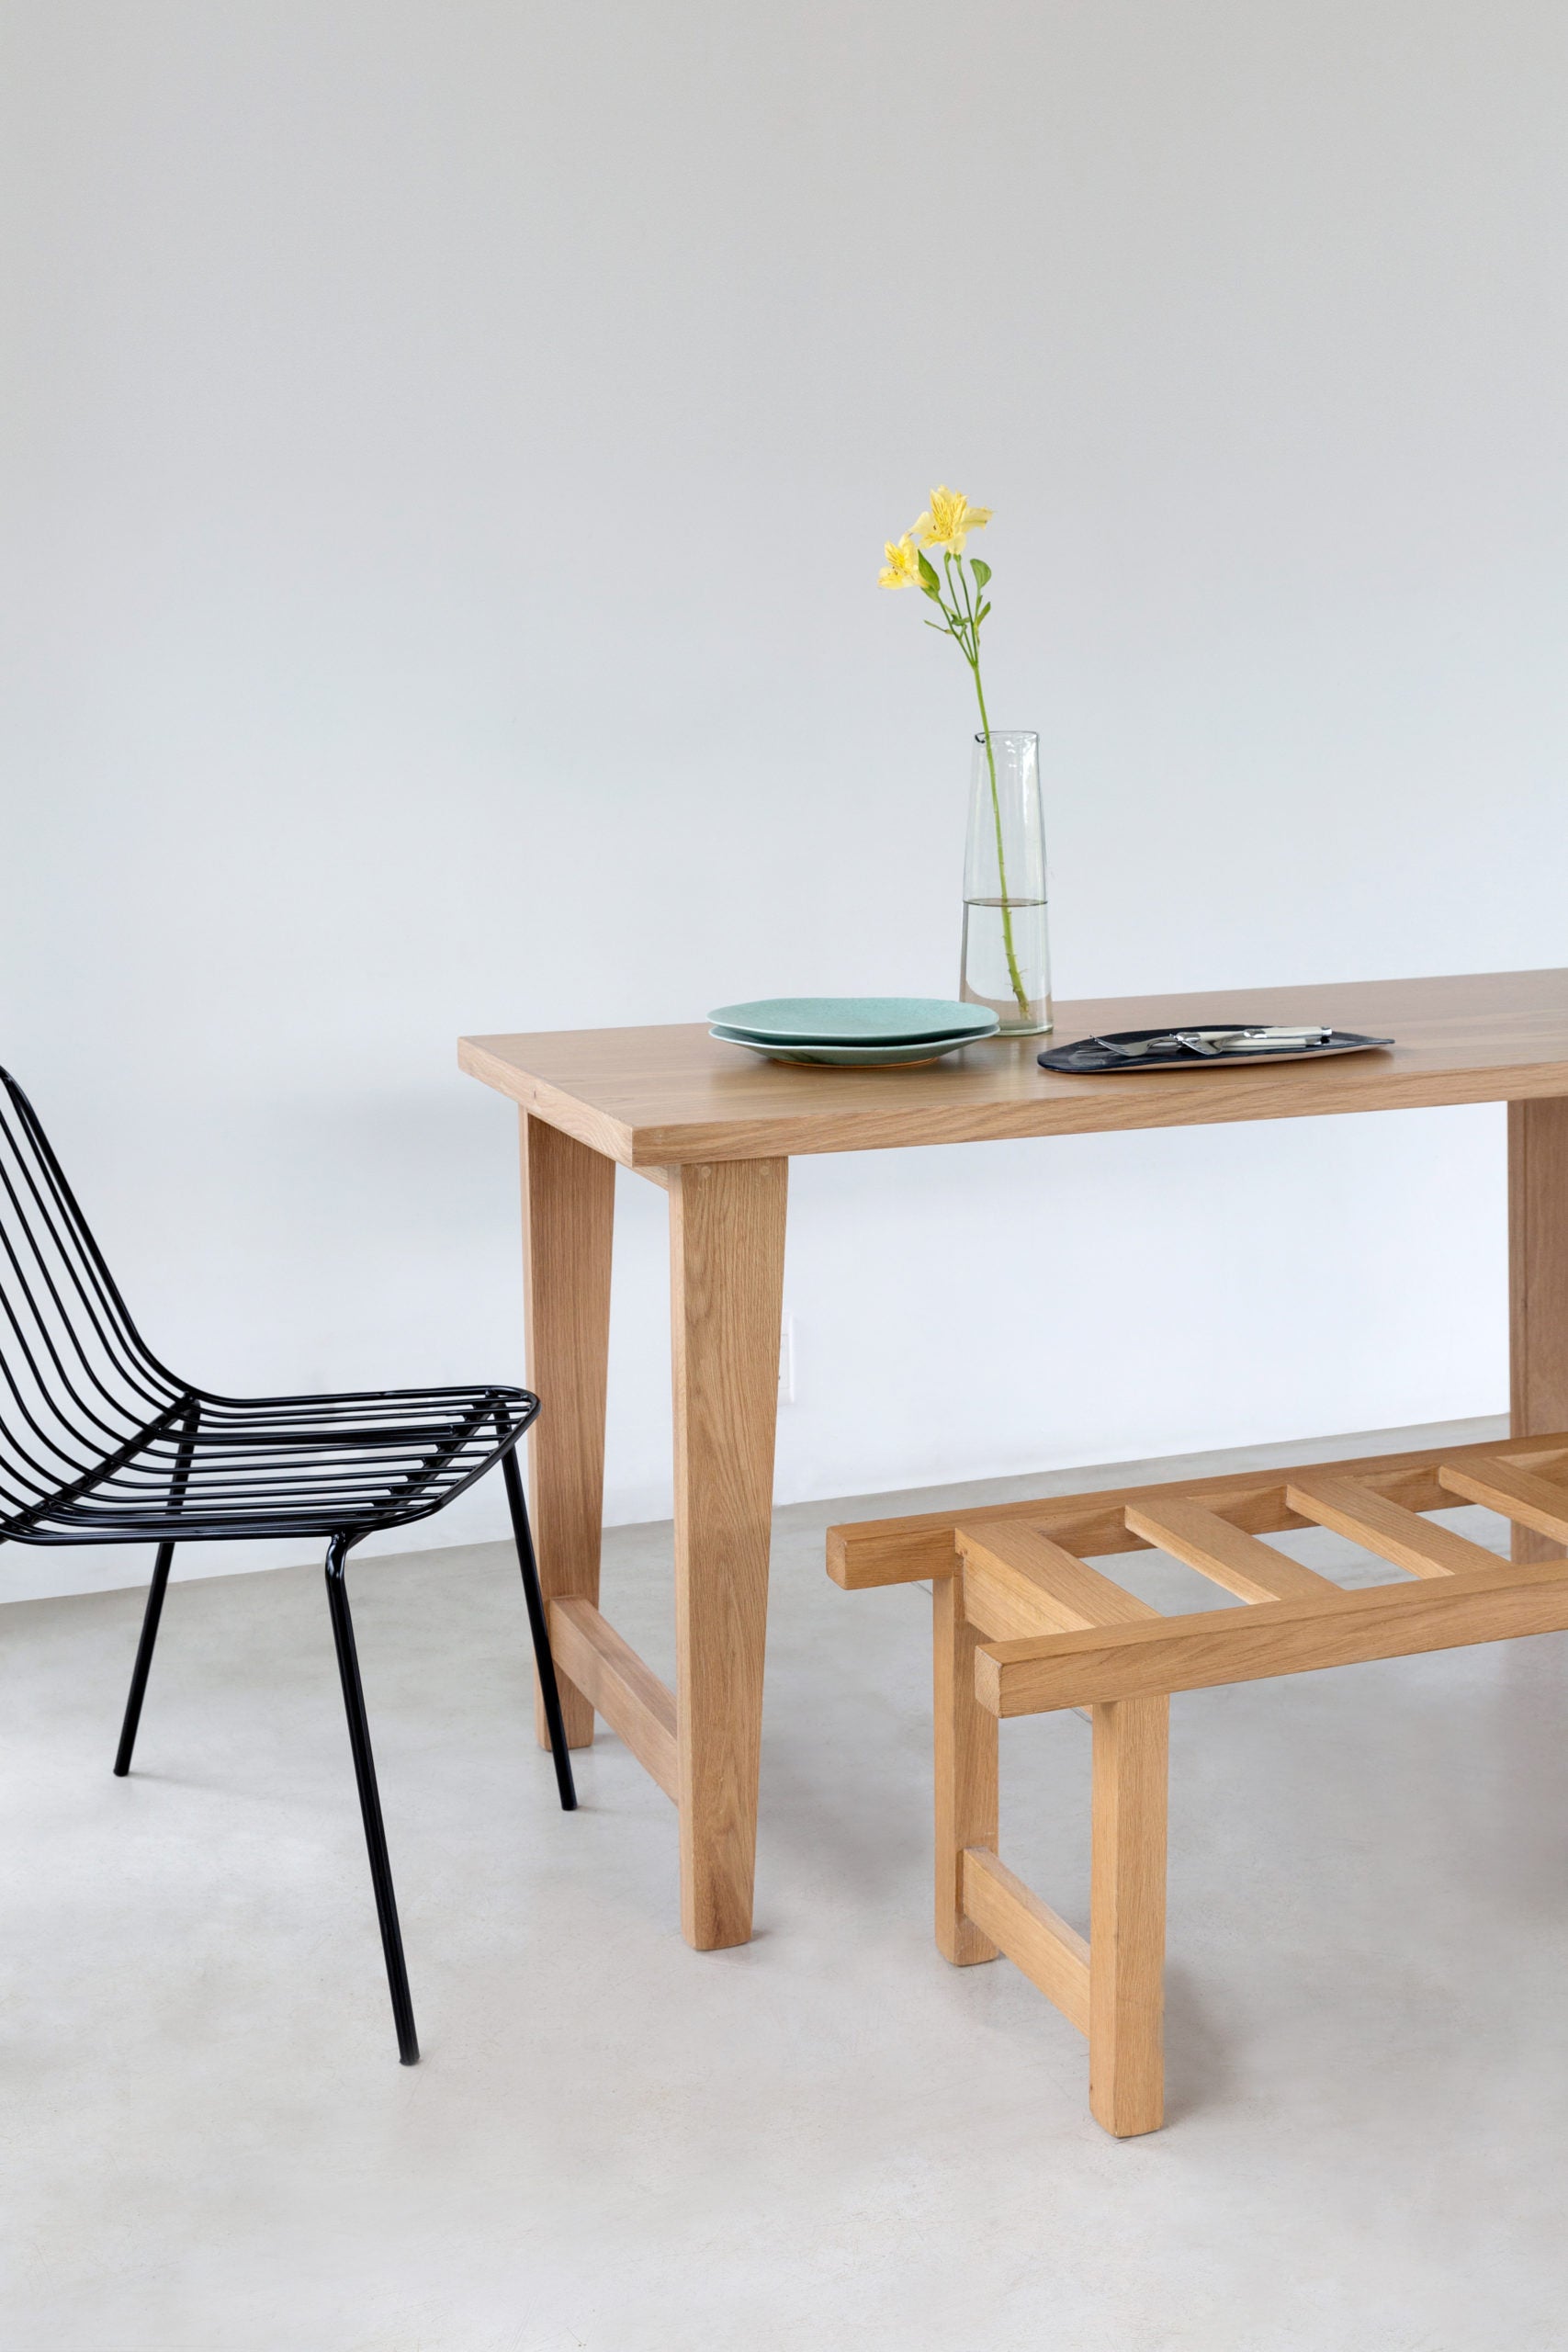 The Danish. Modern Table or Desk - Trestle South Africa